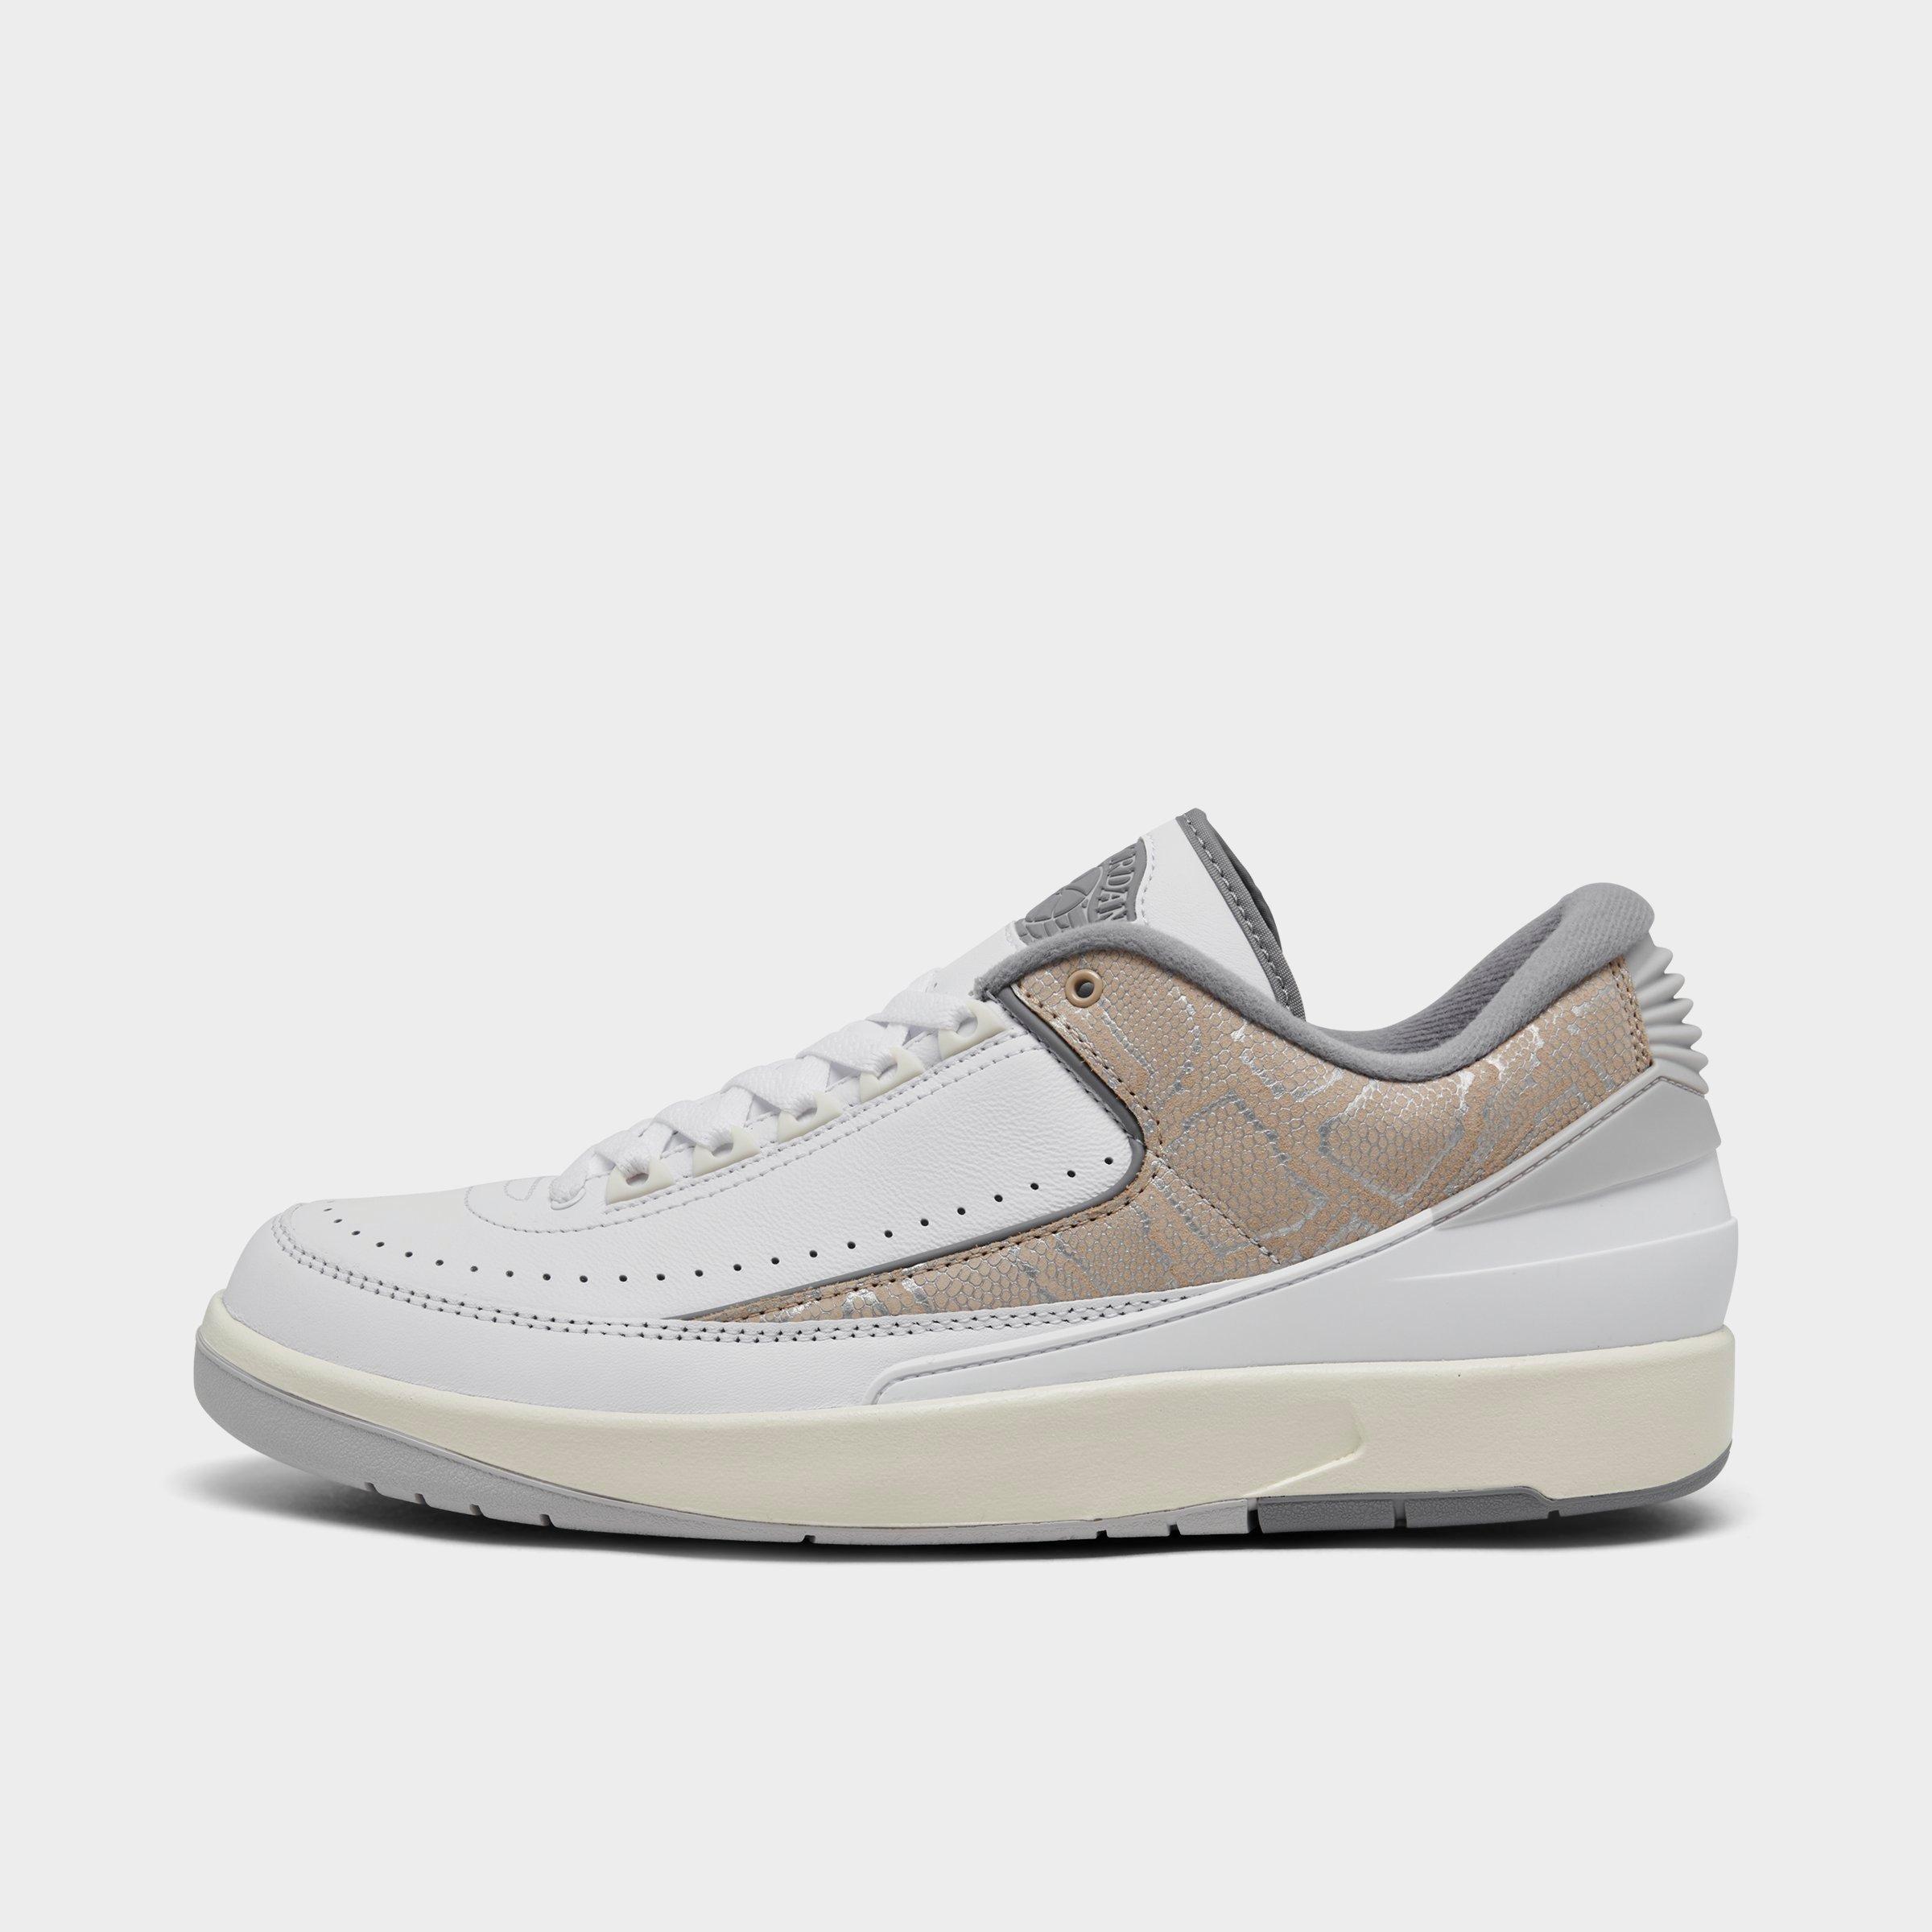 Shop Nike Jordan Air Retro 2 Low Basketball Shoes In White/cement Grey/sanddrift/neutral Grey